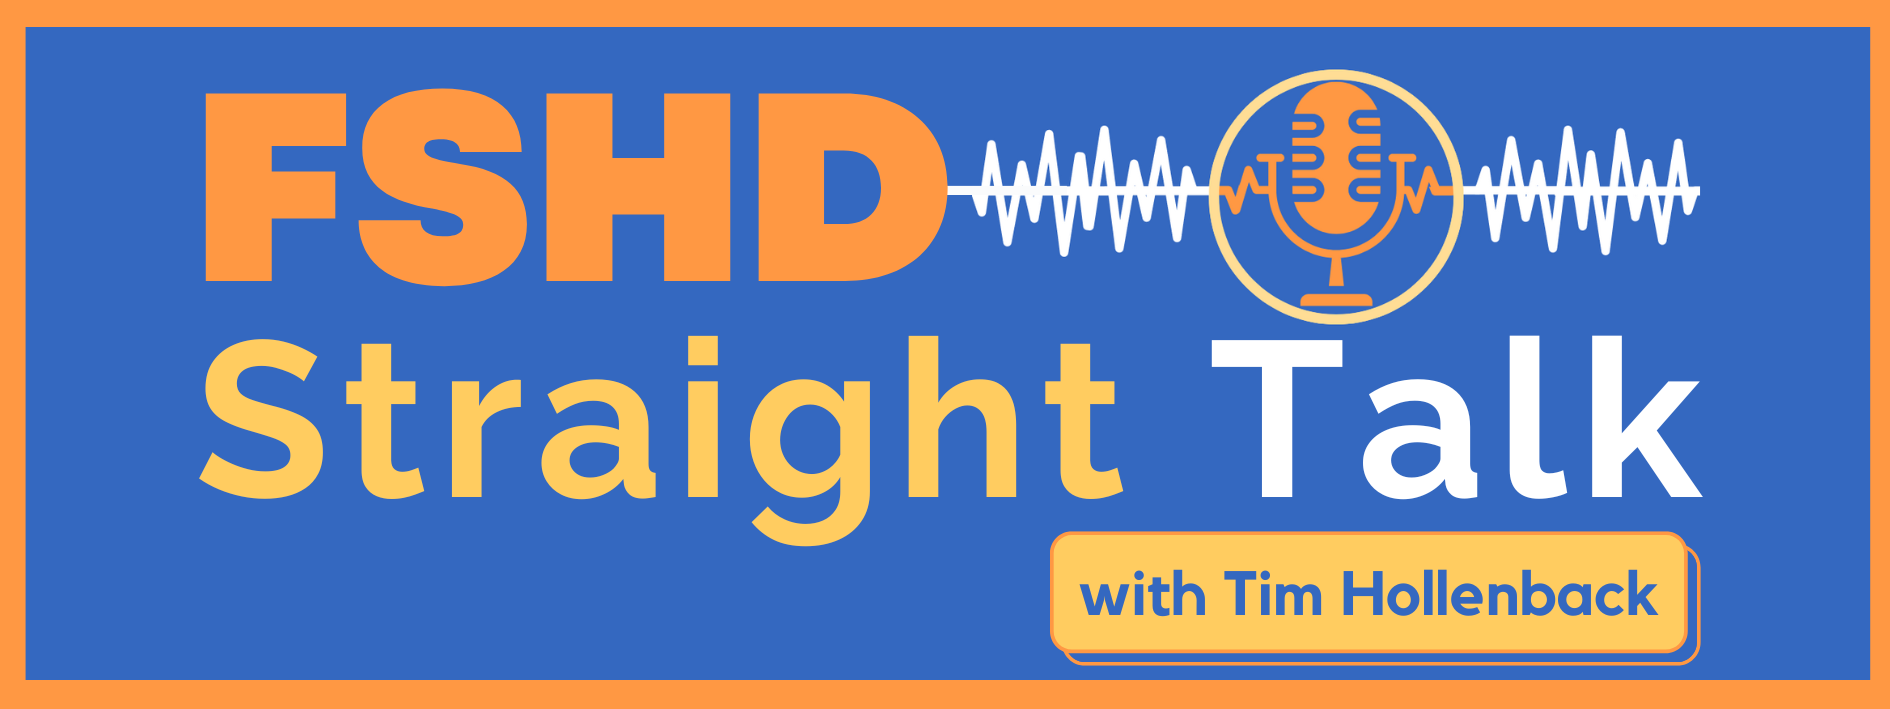 FSHD Straight Talk Calendar Feature image